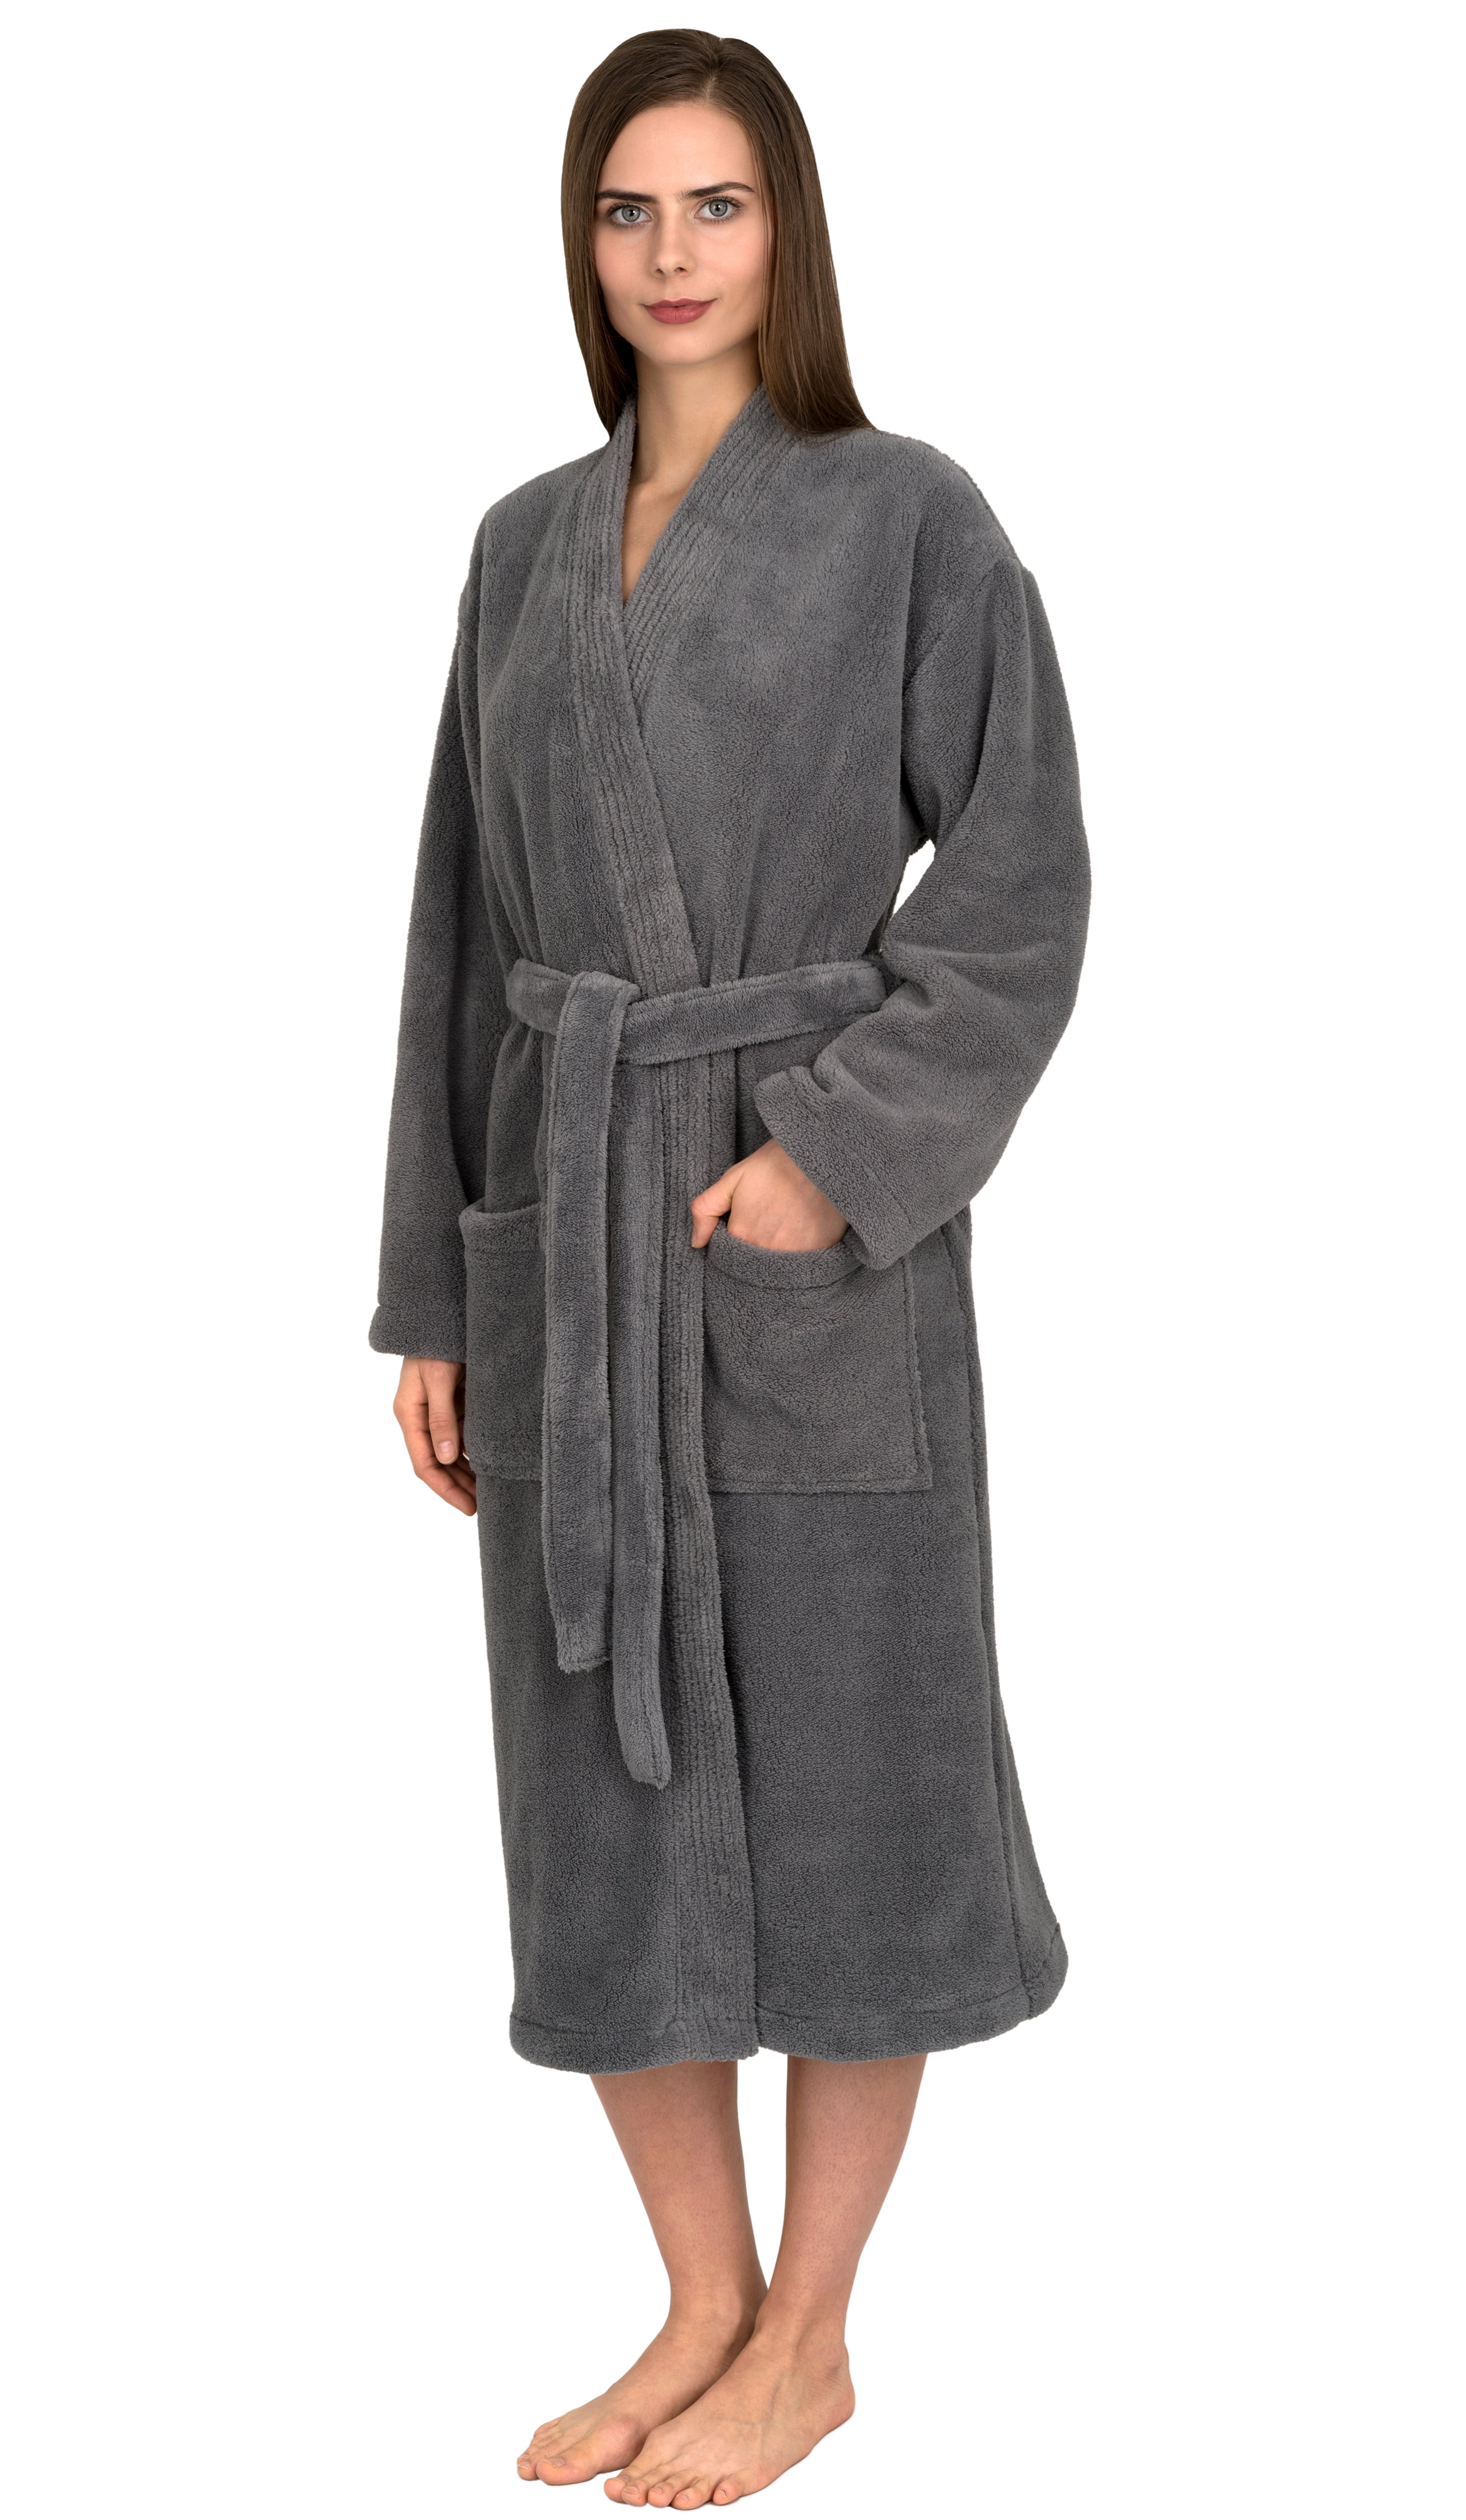 TowelSelections Women's Soft Plush Robe Fleece Kimono Spa Bathrobe 